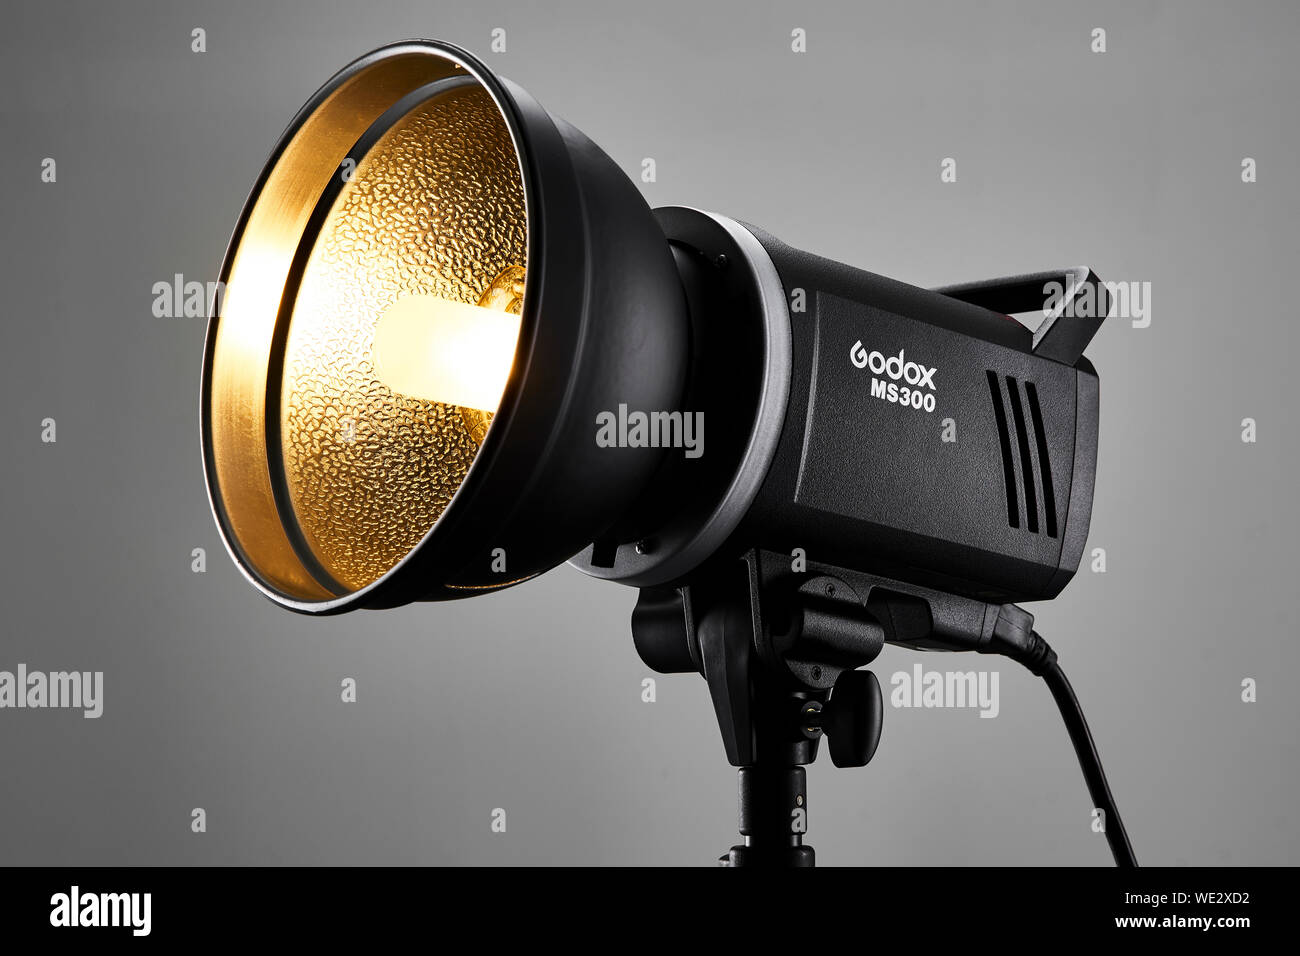 Brand new Godox MS300 photography studio flash head turned on in a photo studio environment. Stock Photo